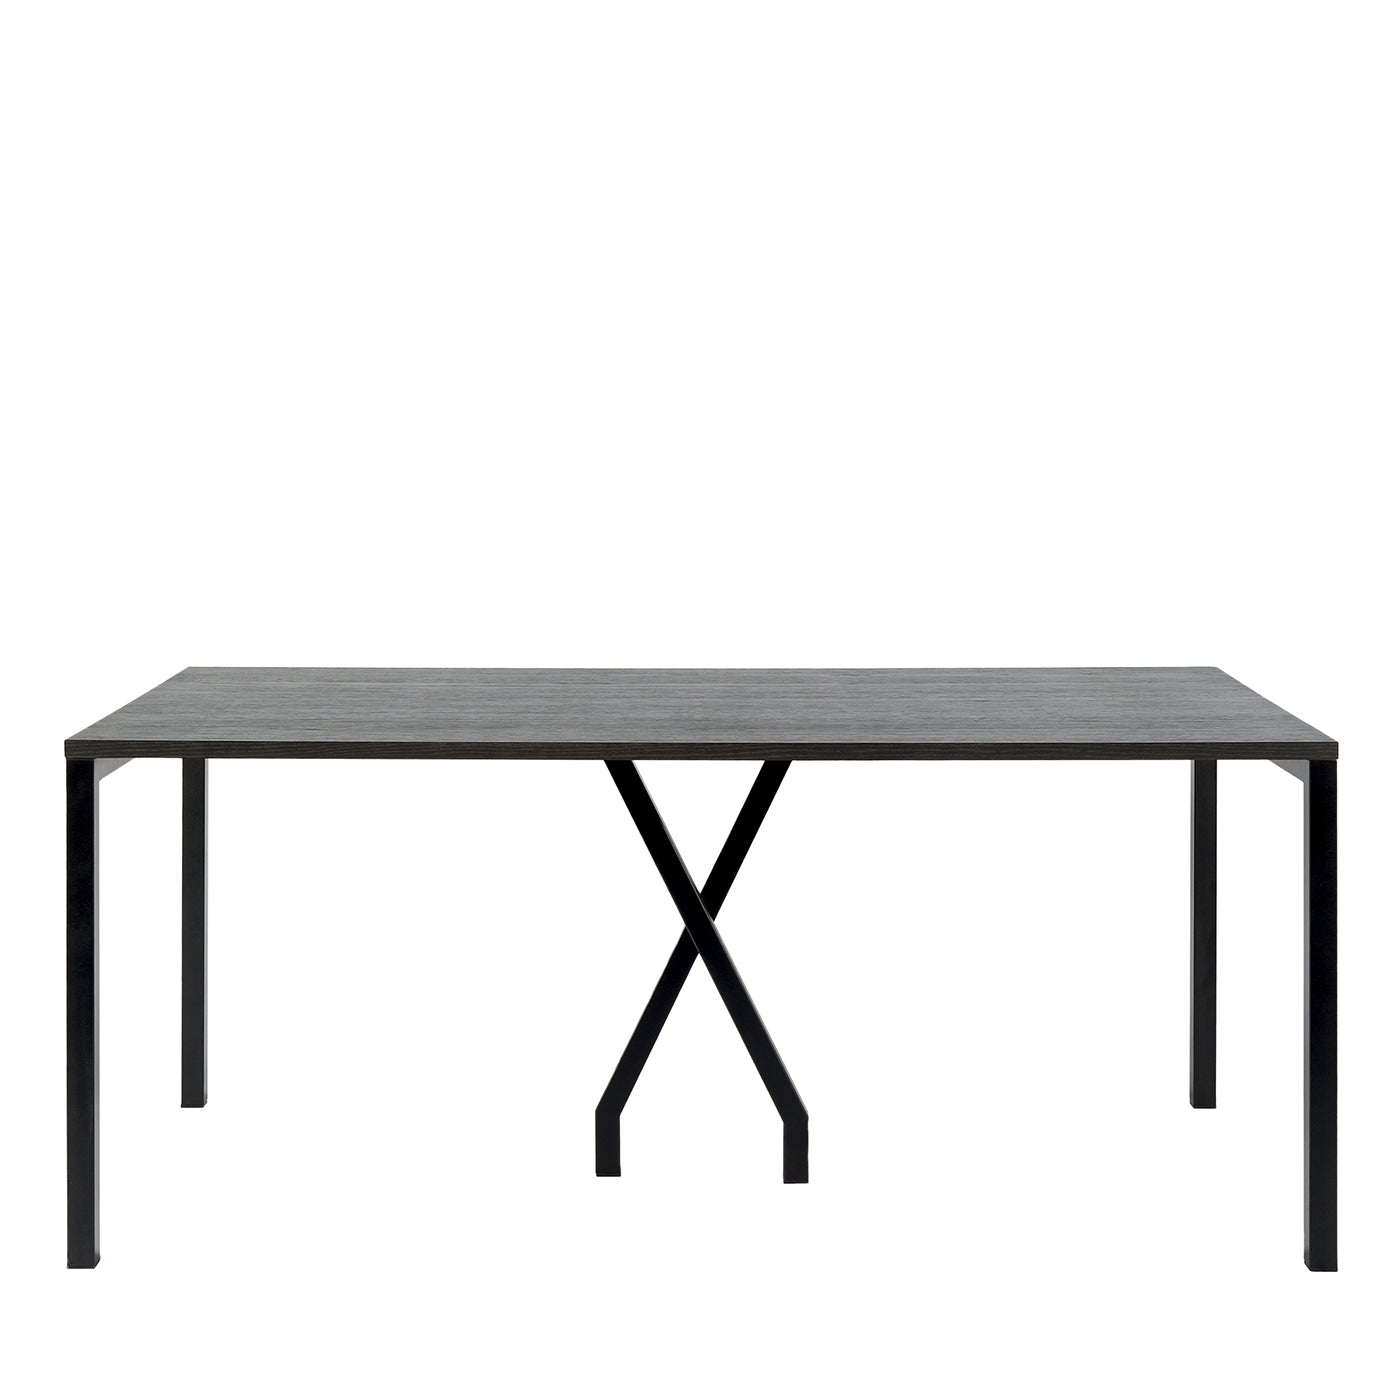 Cavalletta Rectangular Black Table by Studiocharlie - Main view